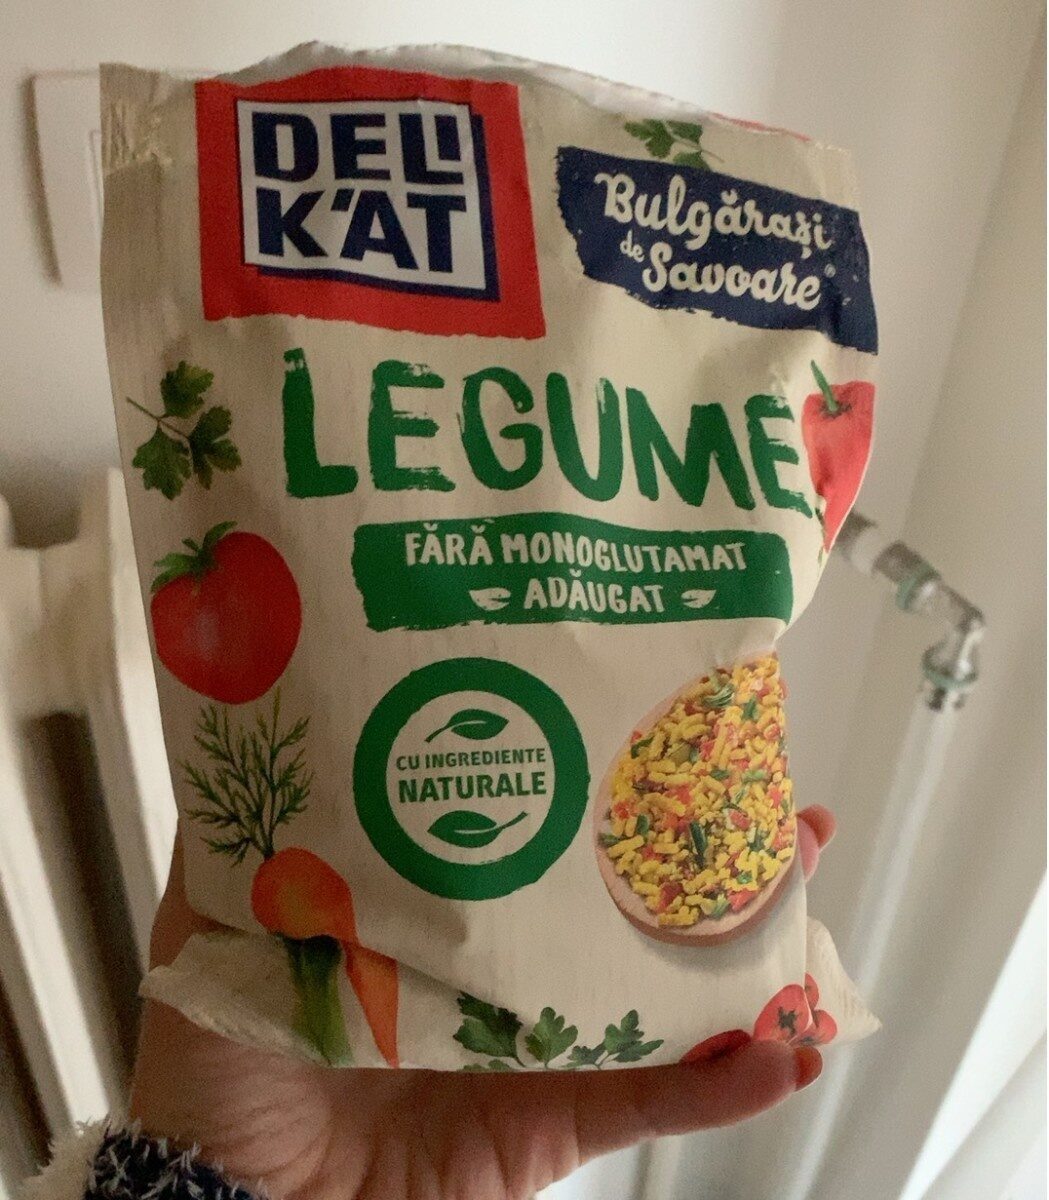 relax common sense Recur delikat bulgarasi legume - Unilever